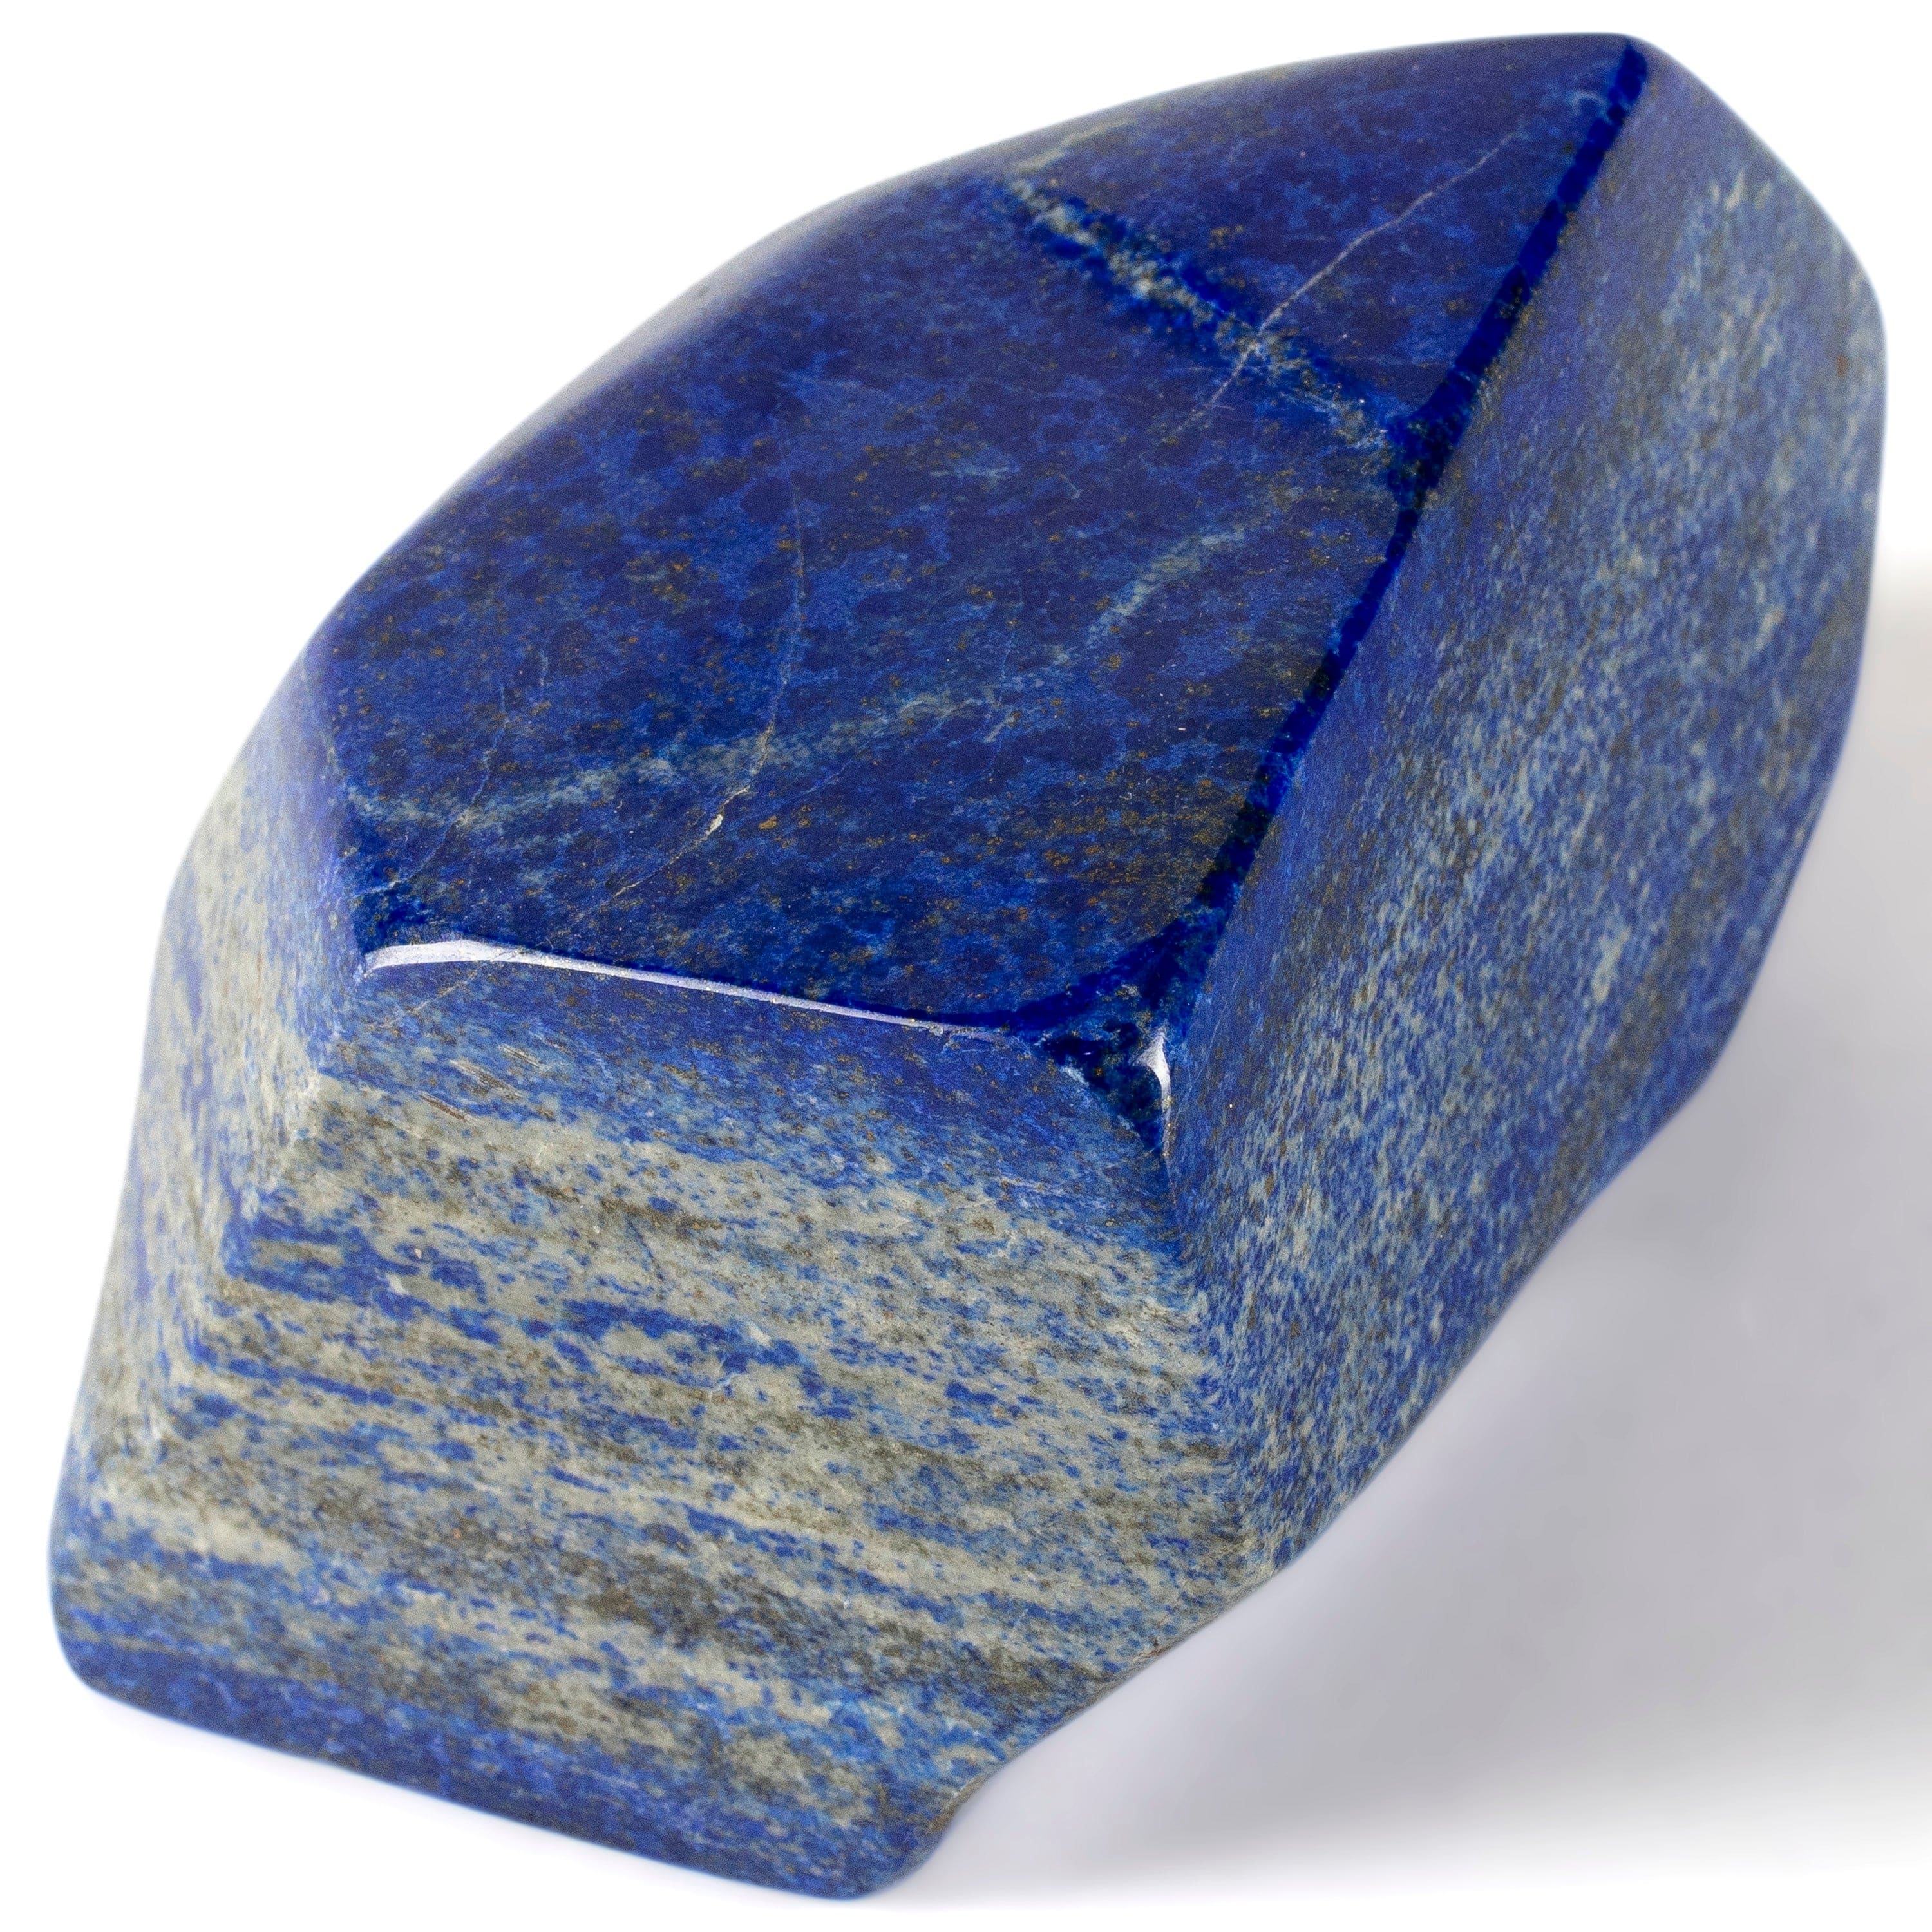 Kalifano Lapis Lapis Lazuli Freeform from Afghanistan - 4.5" / 1,290 grams LP1300.006